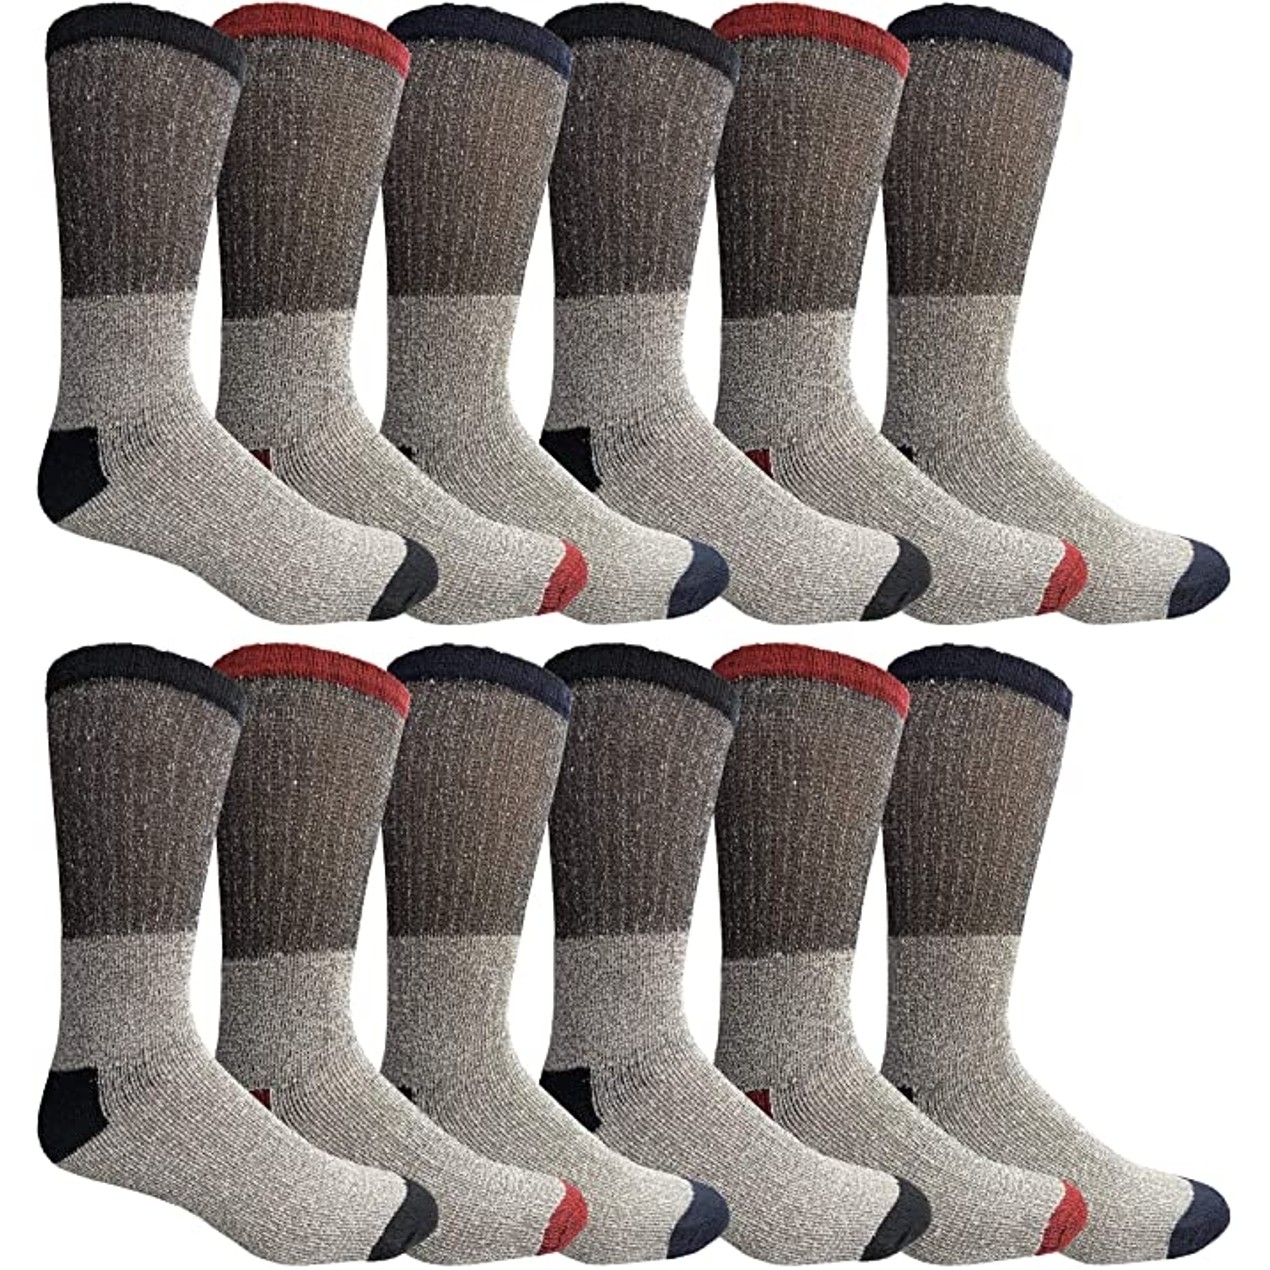 12 Pair: Men's Big & Tall Thermal Insulated Crew Socks